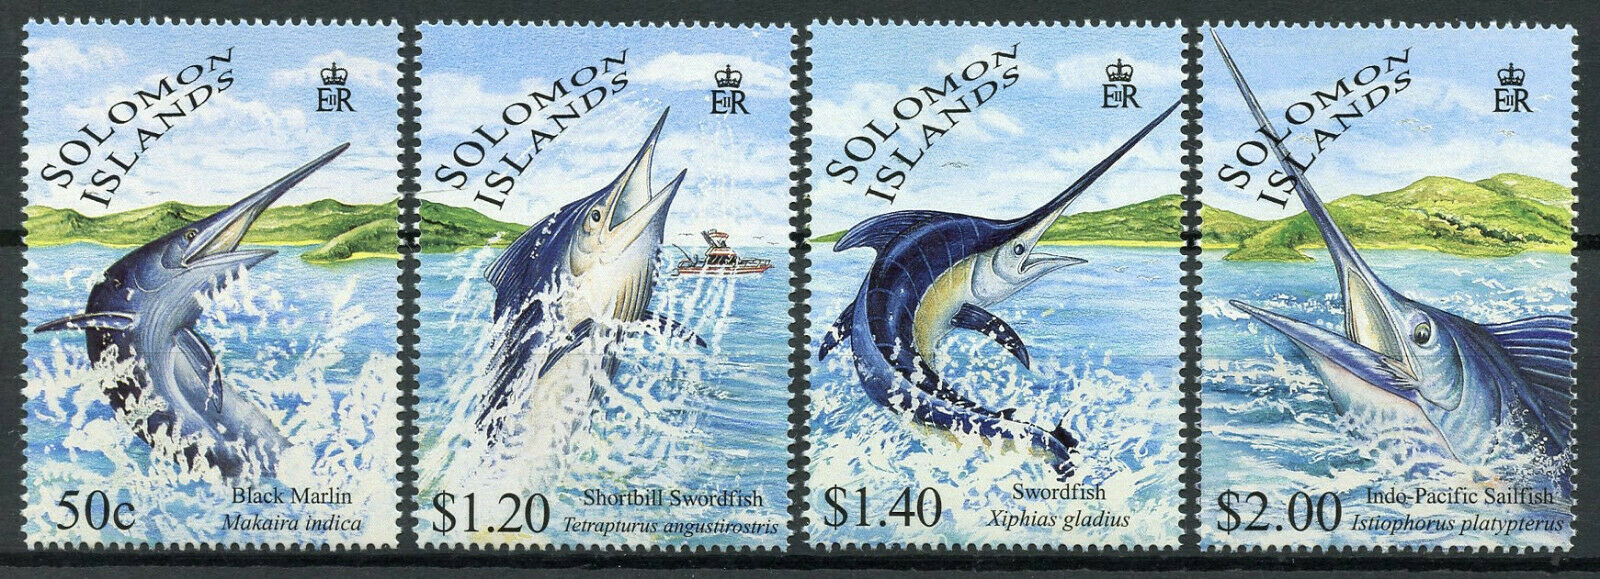 Solomon Islands Fish Stamps 1998 MNH Billfish Swordfish Marlin Marine 4v Set